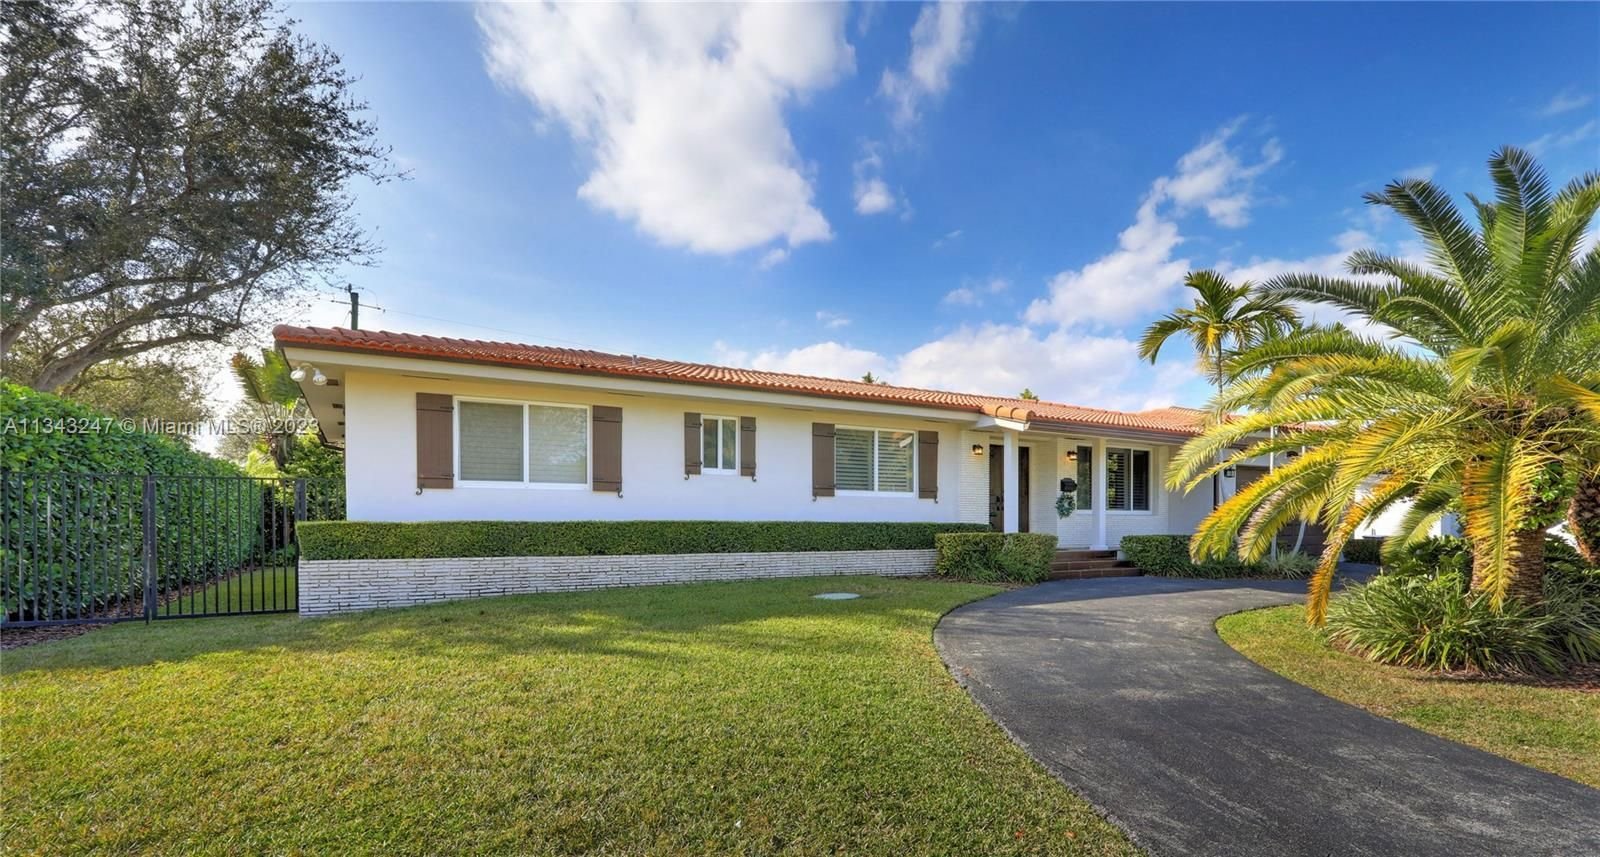 Real estate property located at 4990 64th Pl, Miami-Dade County, Miami, FL